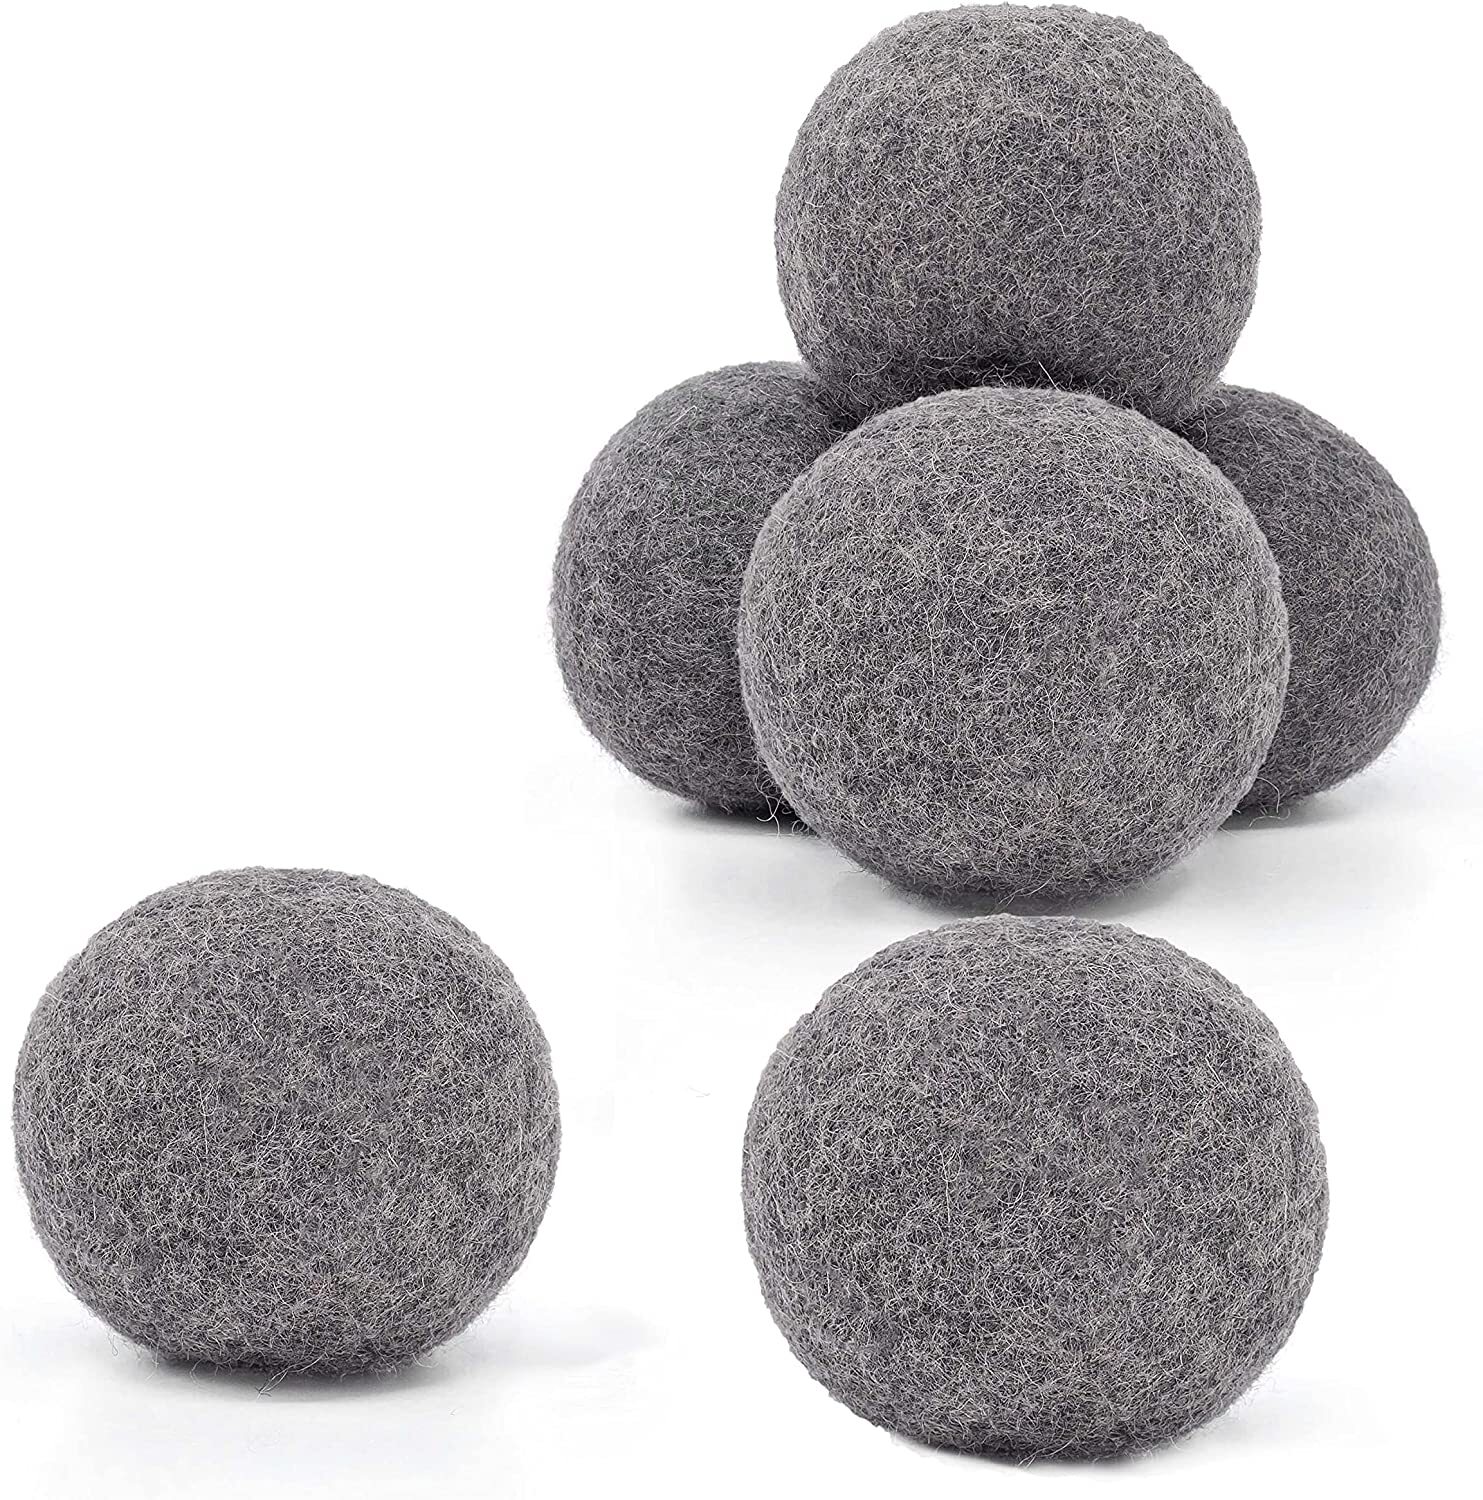 Larque gray wool dryer balls